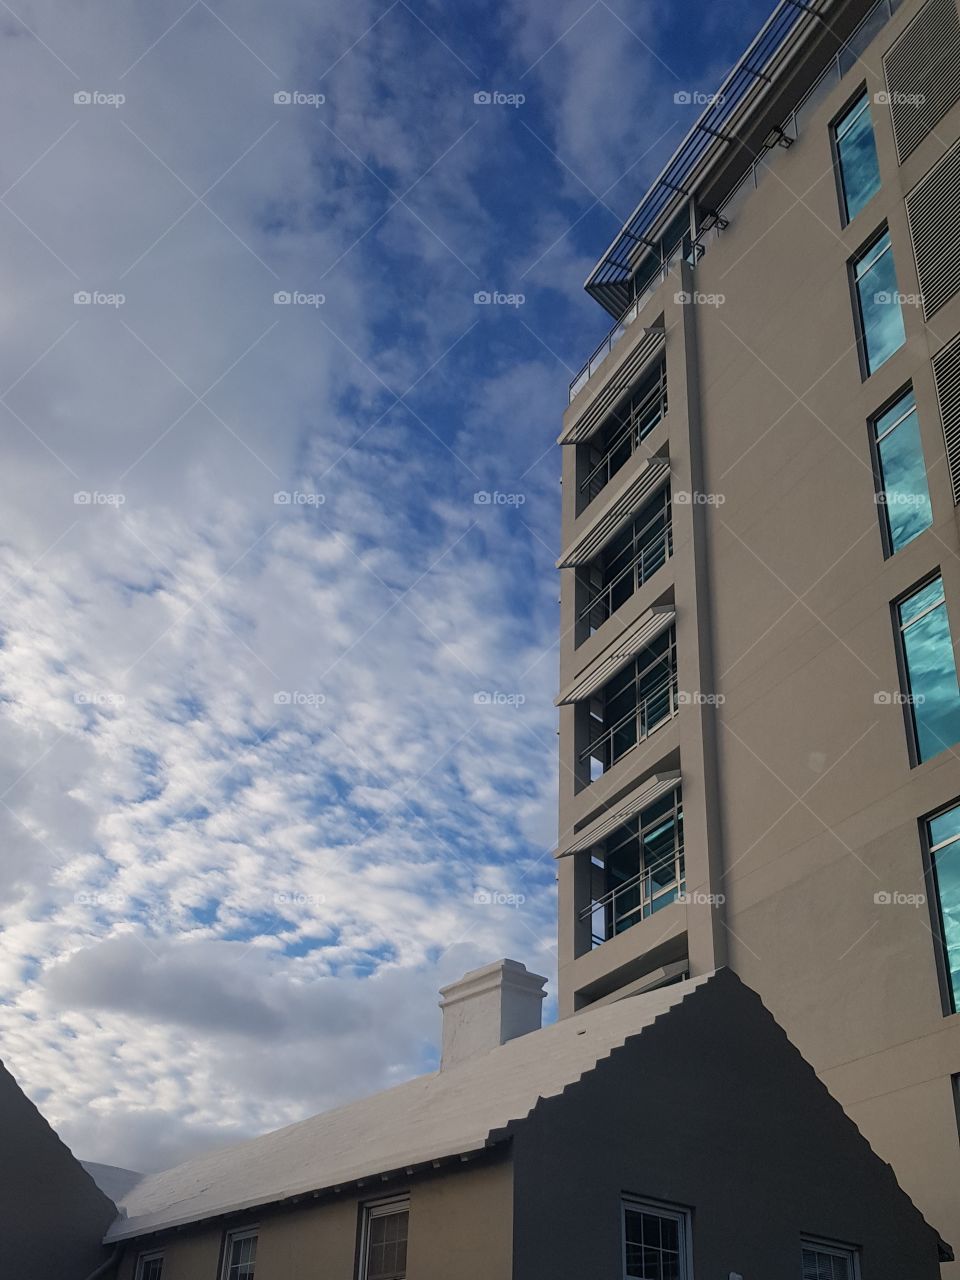 Business building in Bermuda. Architecture VS nature in sky.